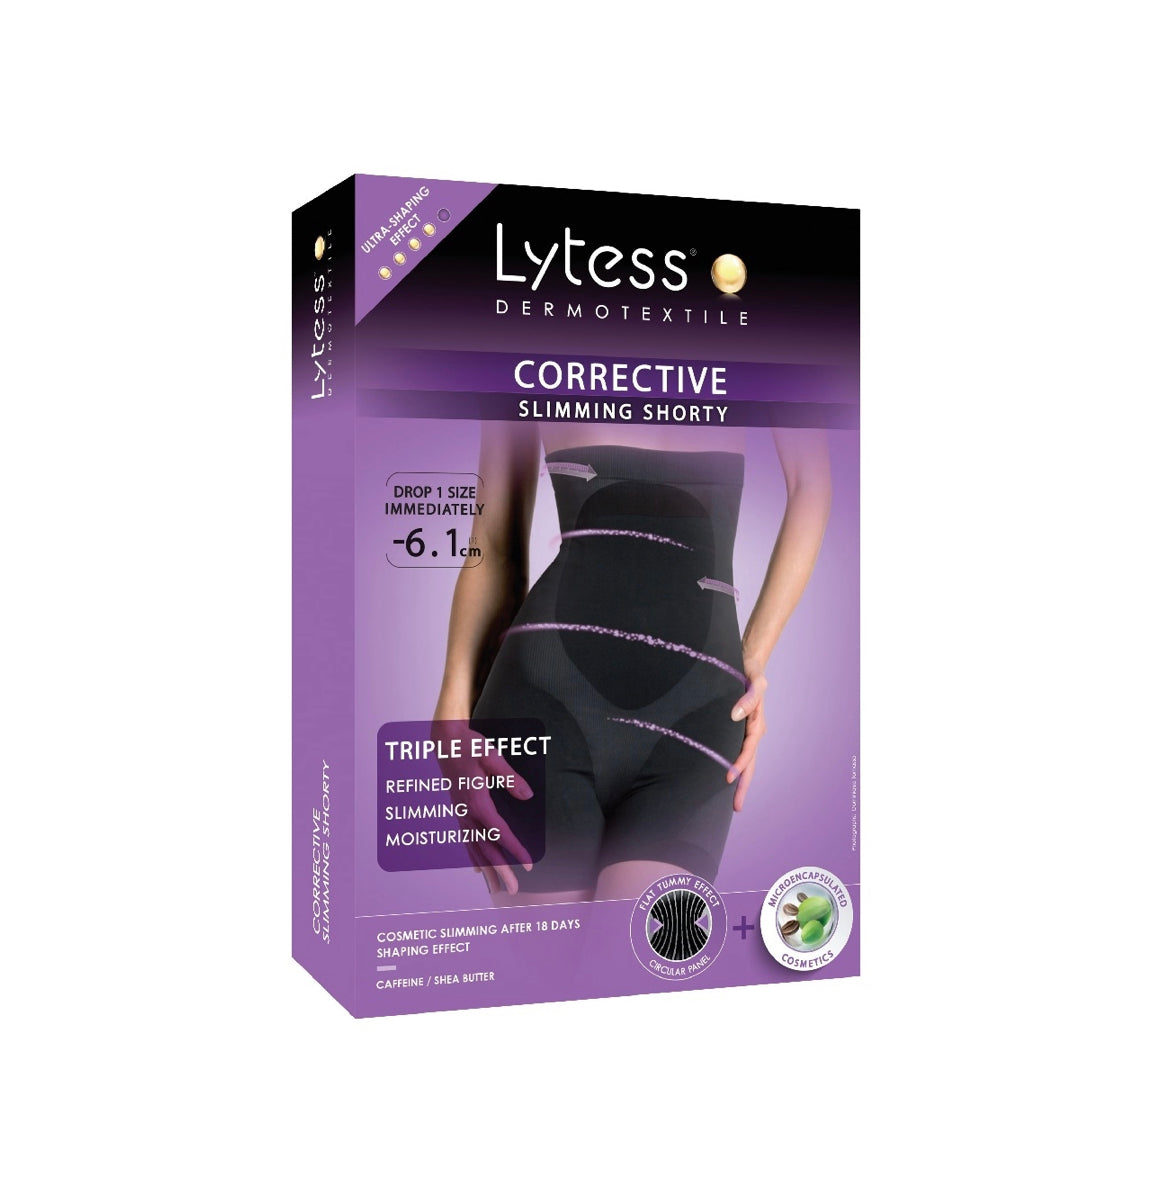 lytess corrective slimming shorty